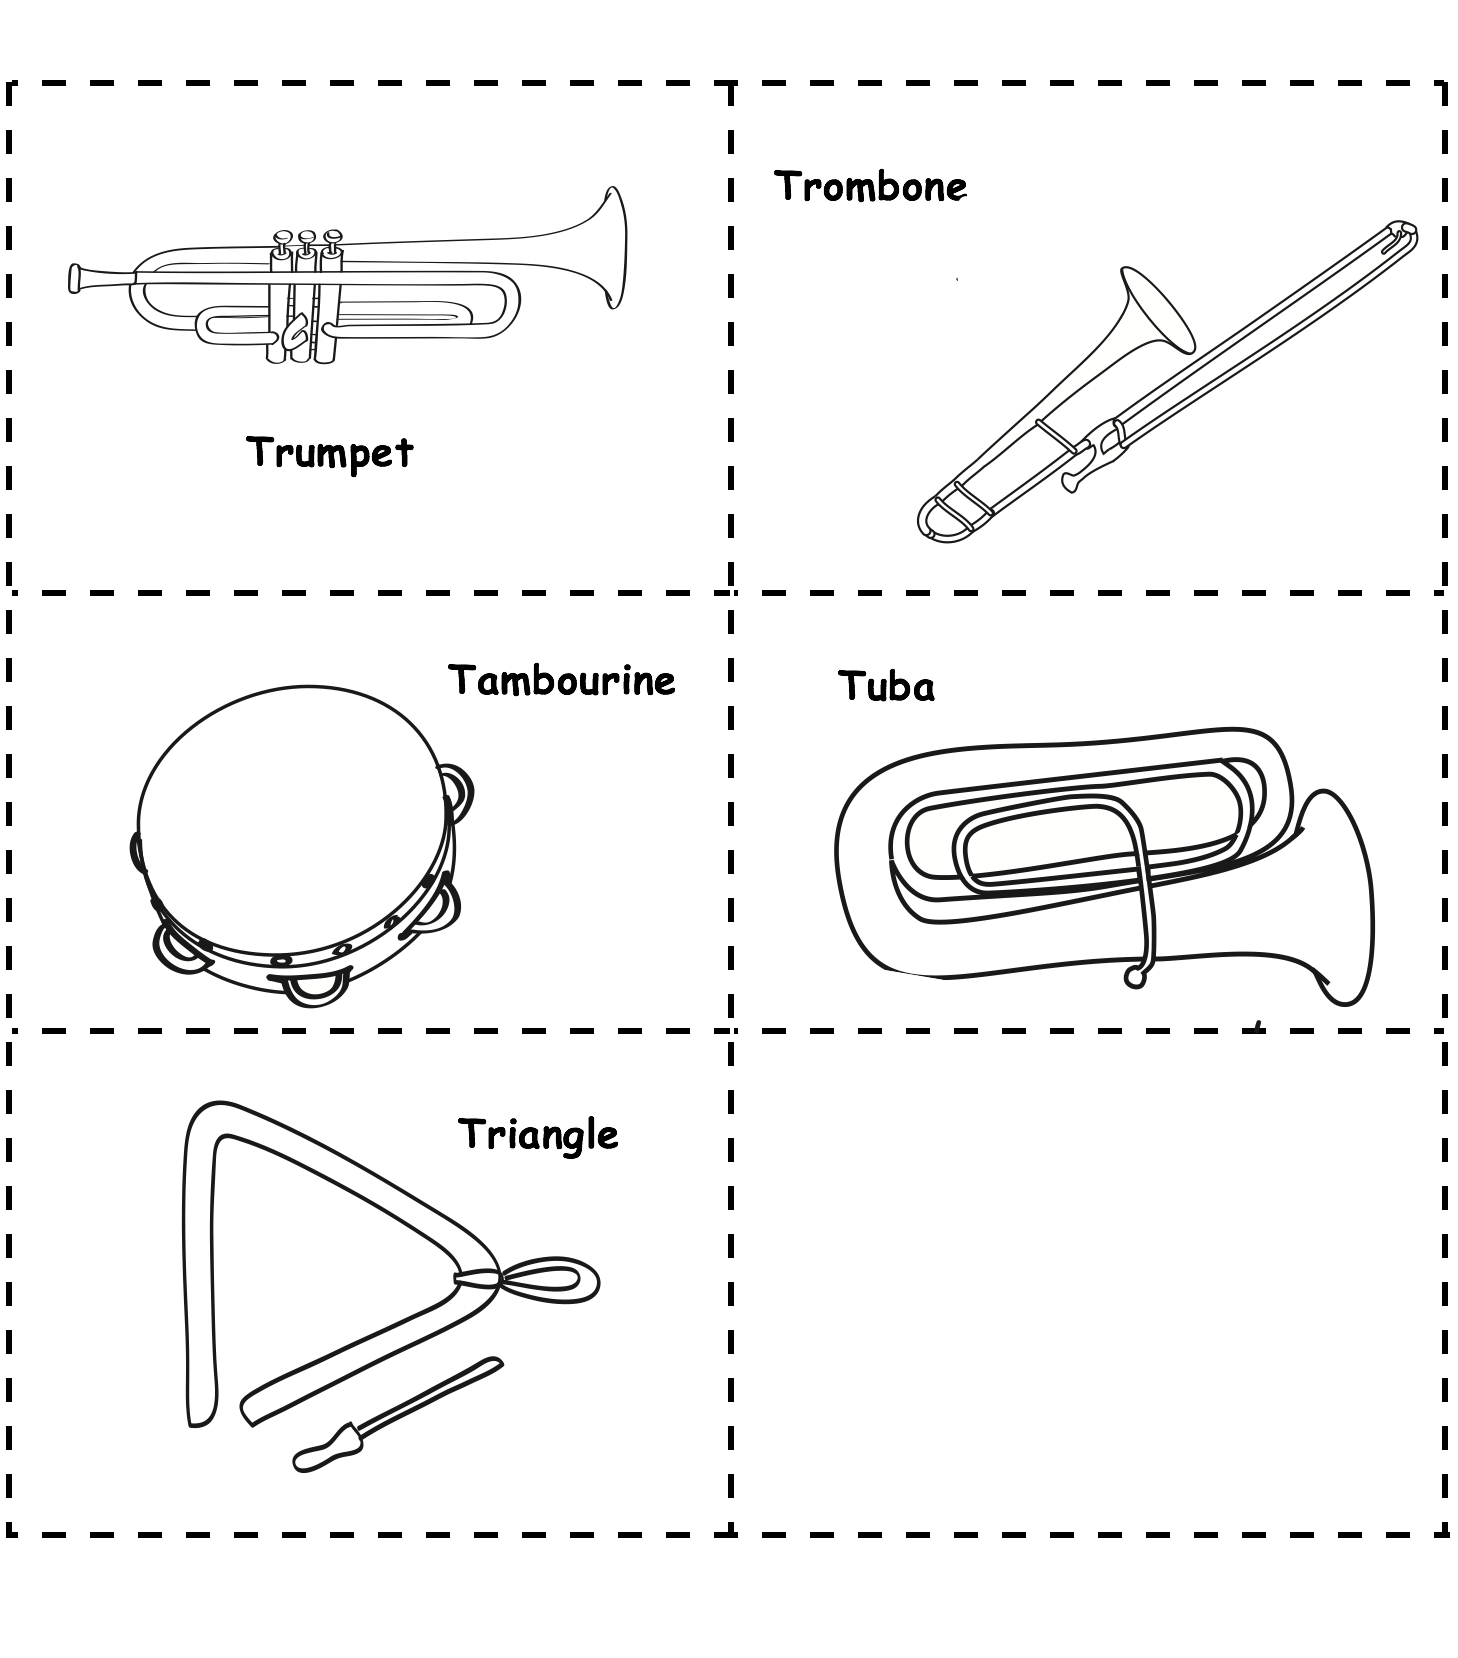 Instrument-picture